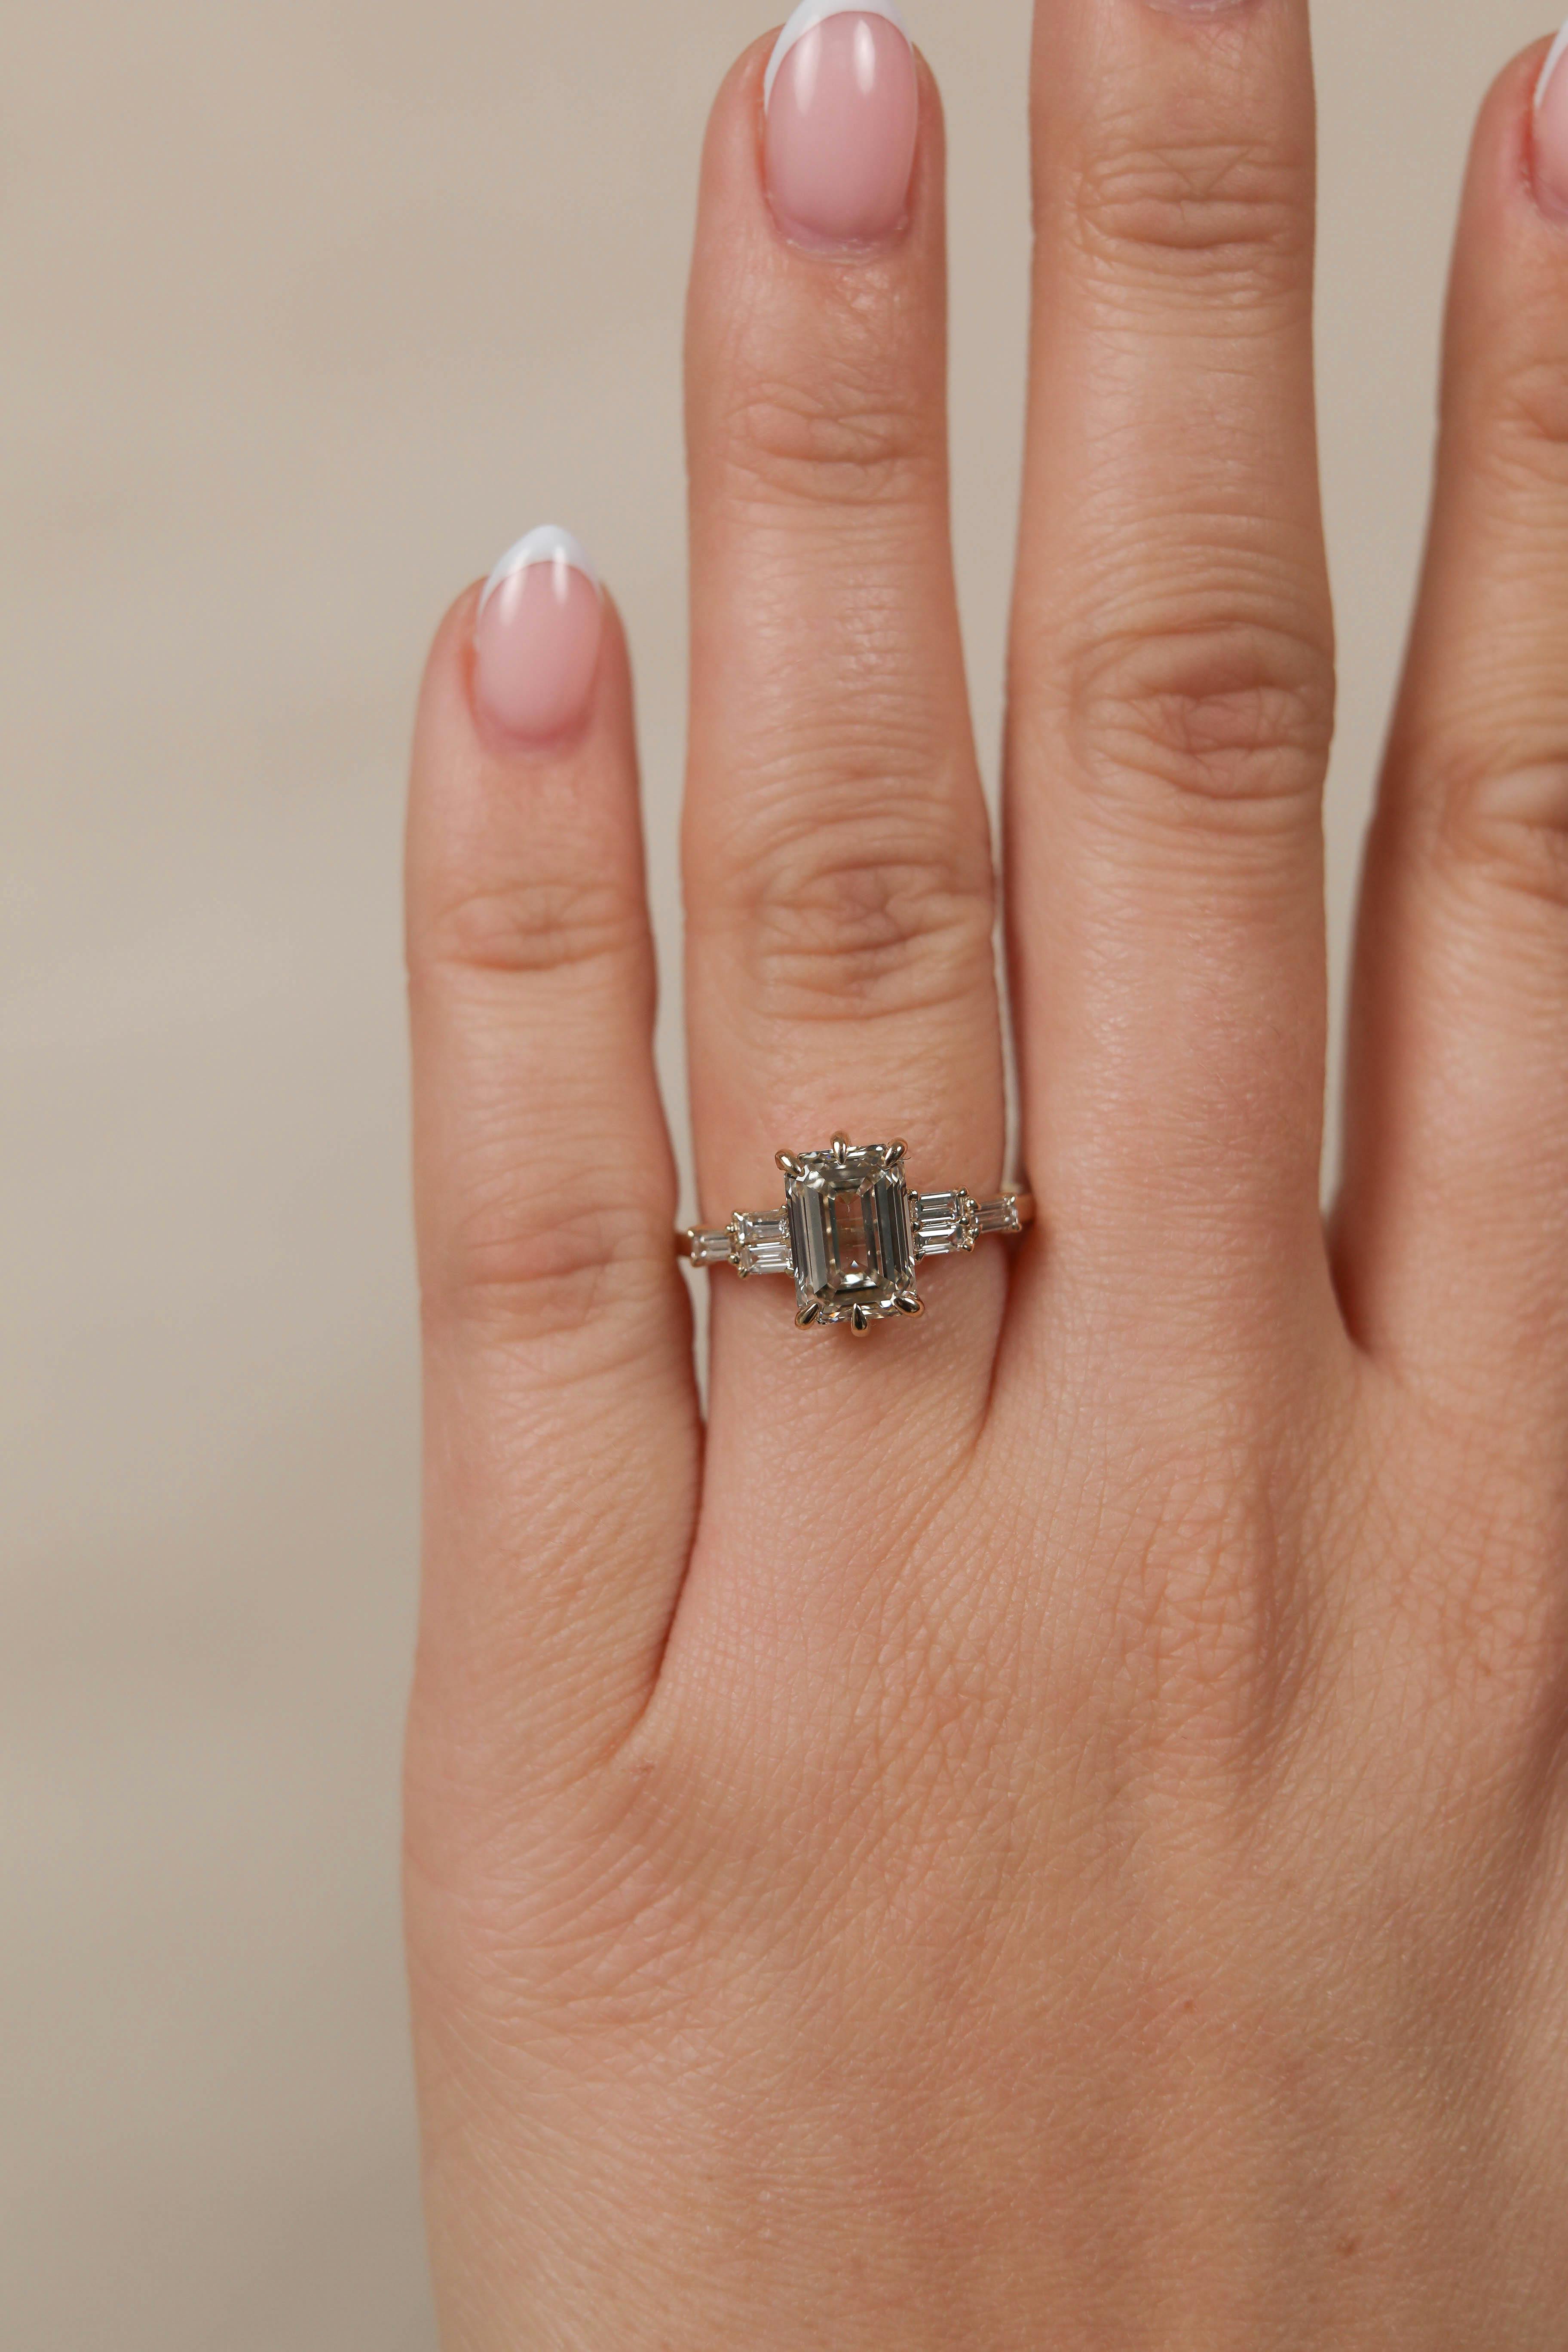 A custom designed engagement ring.